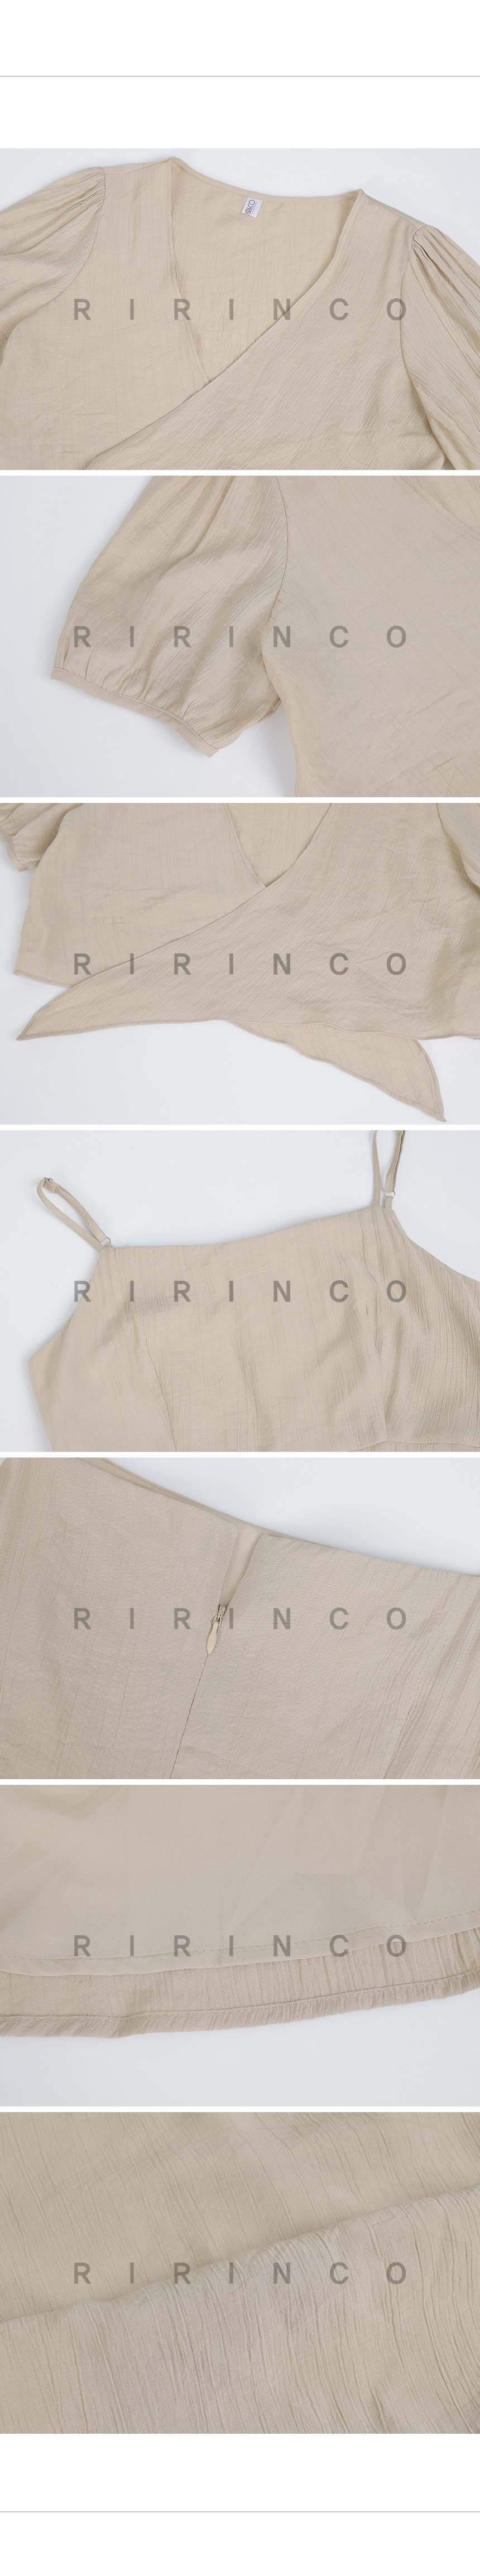 RIRINCO リボンストラップブラウス&ロングキャミワンピースセット